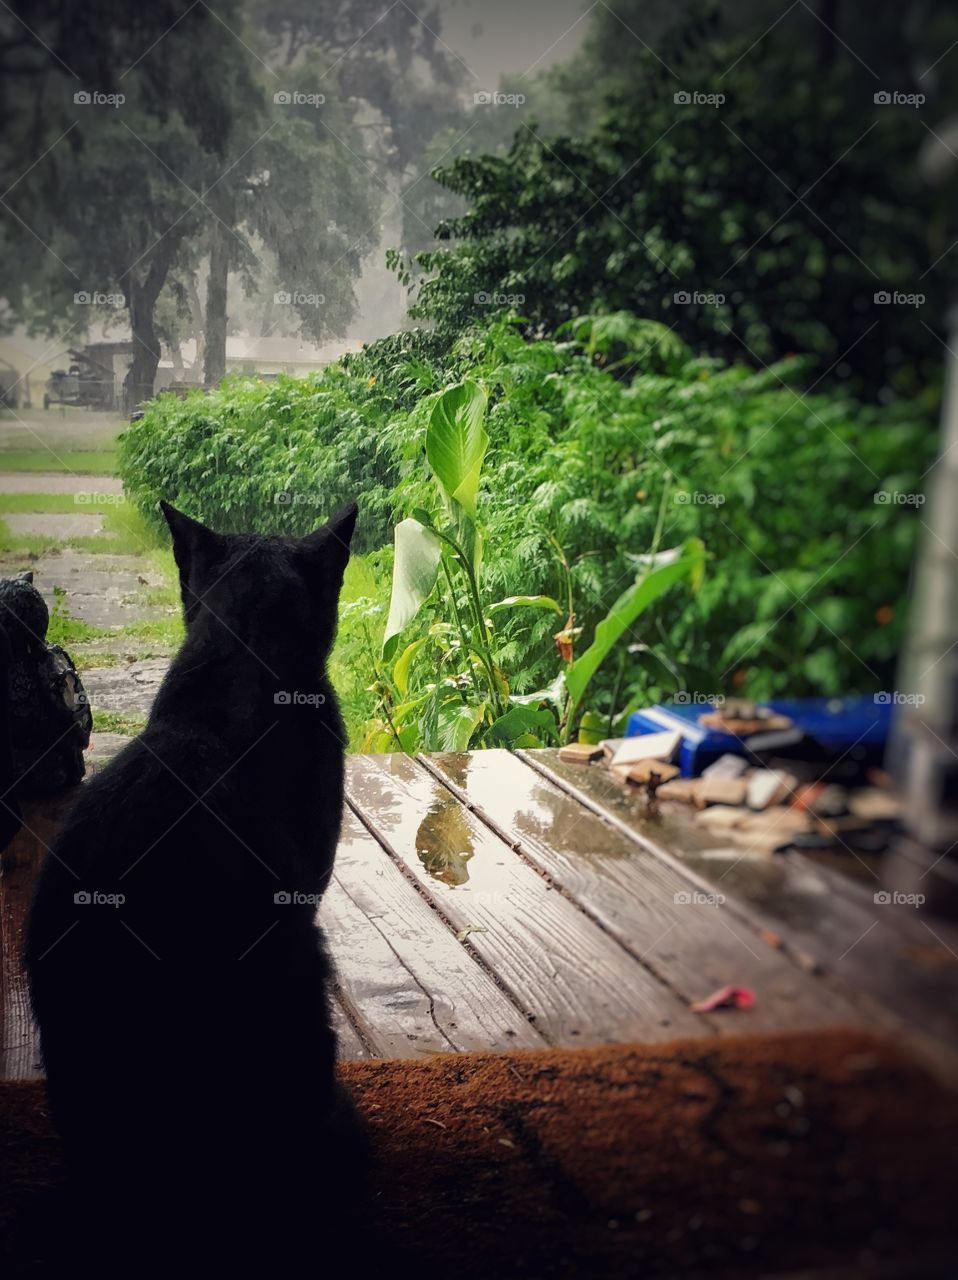 Frank in awe of the rain 